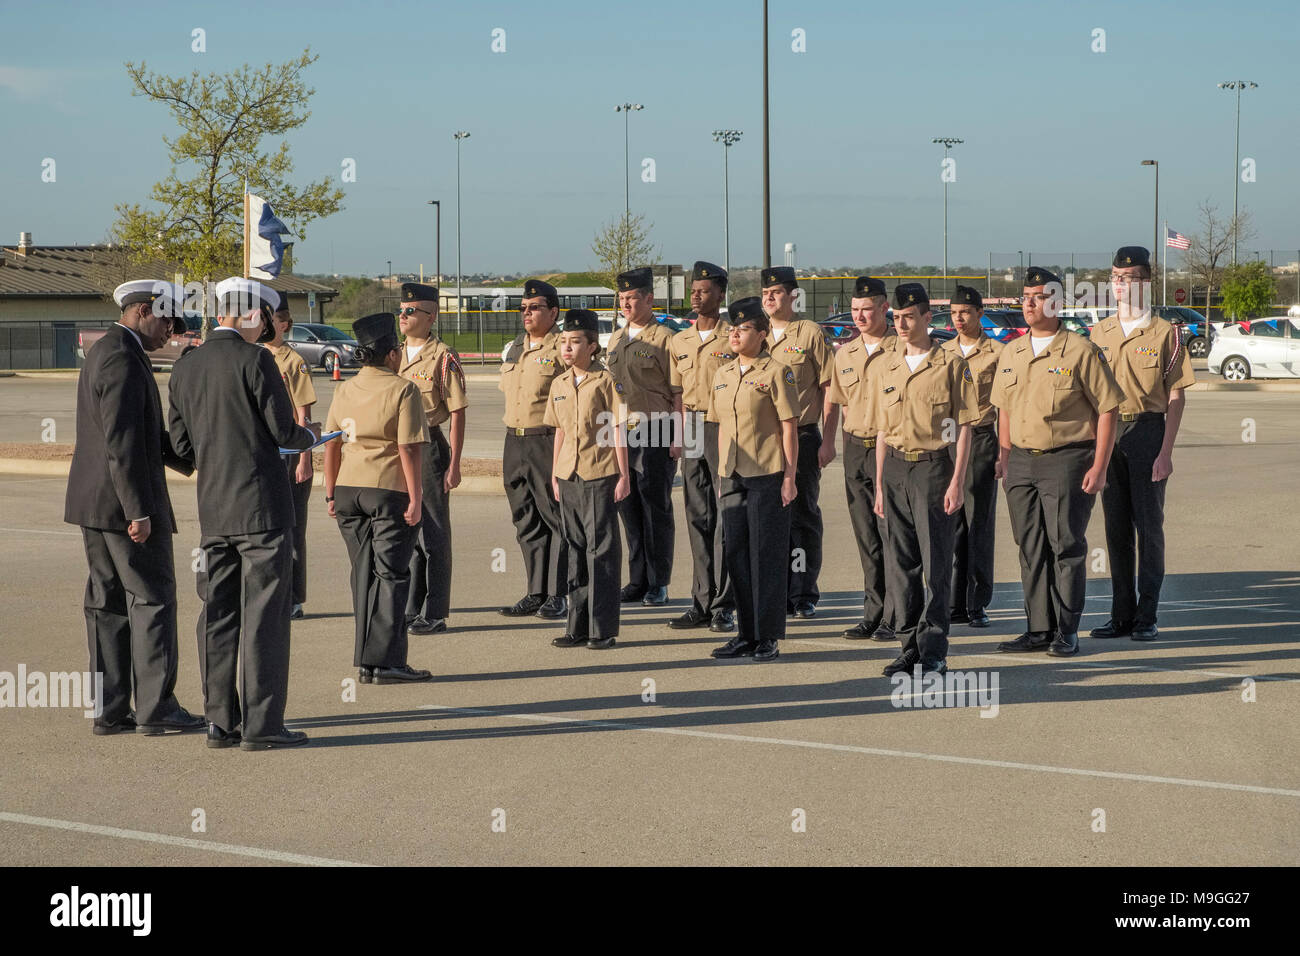 US Navy NJROTC high school cadets en marchant percer la formation durant les inspections officielles Banque D'Images